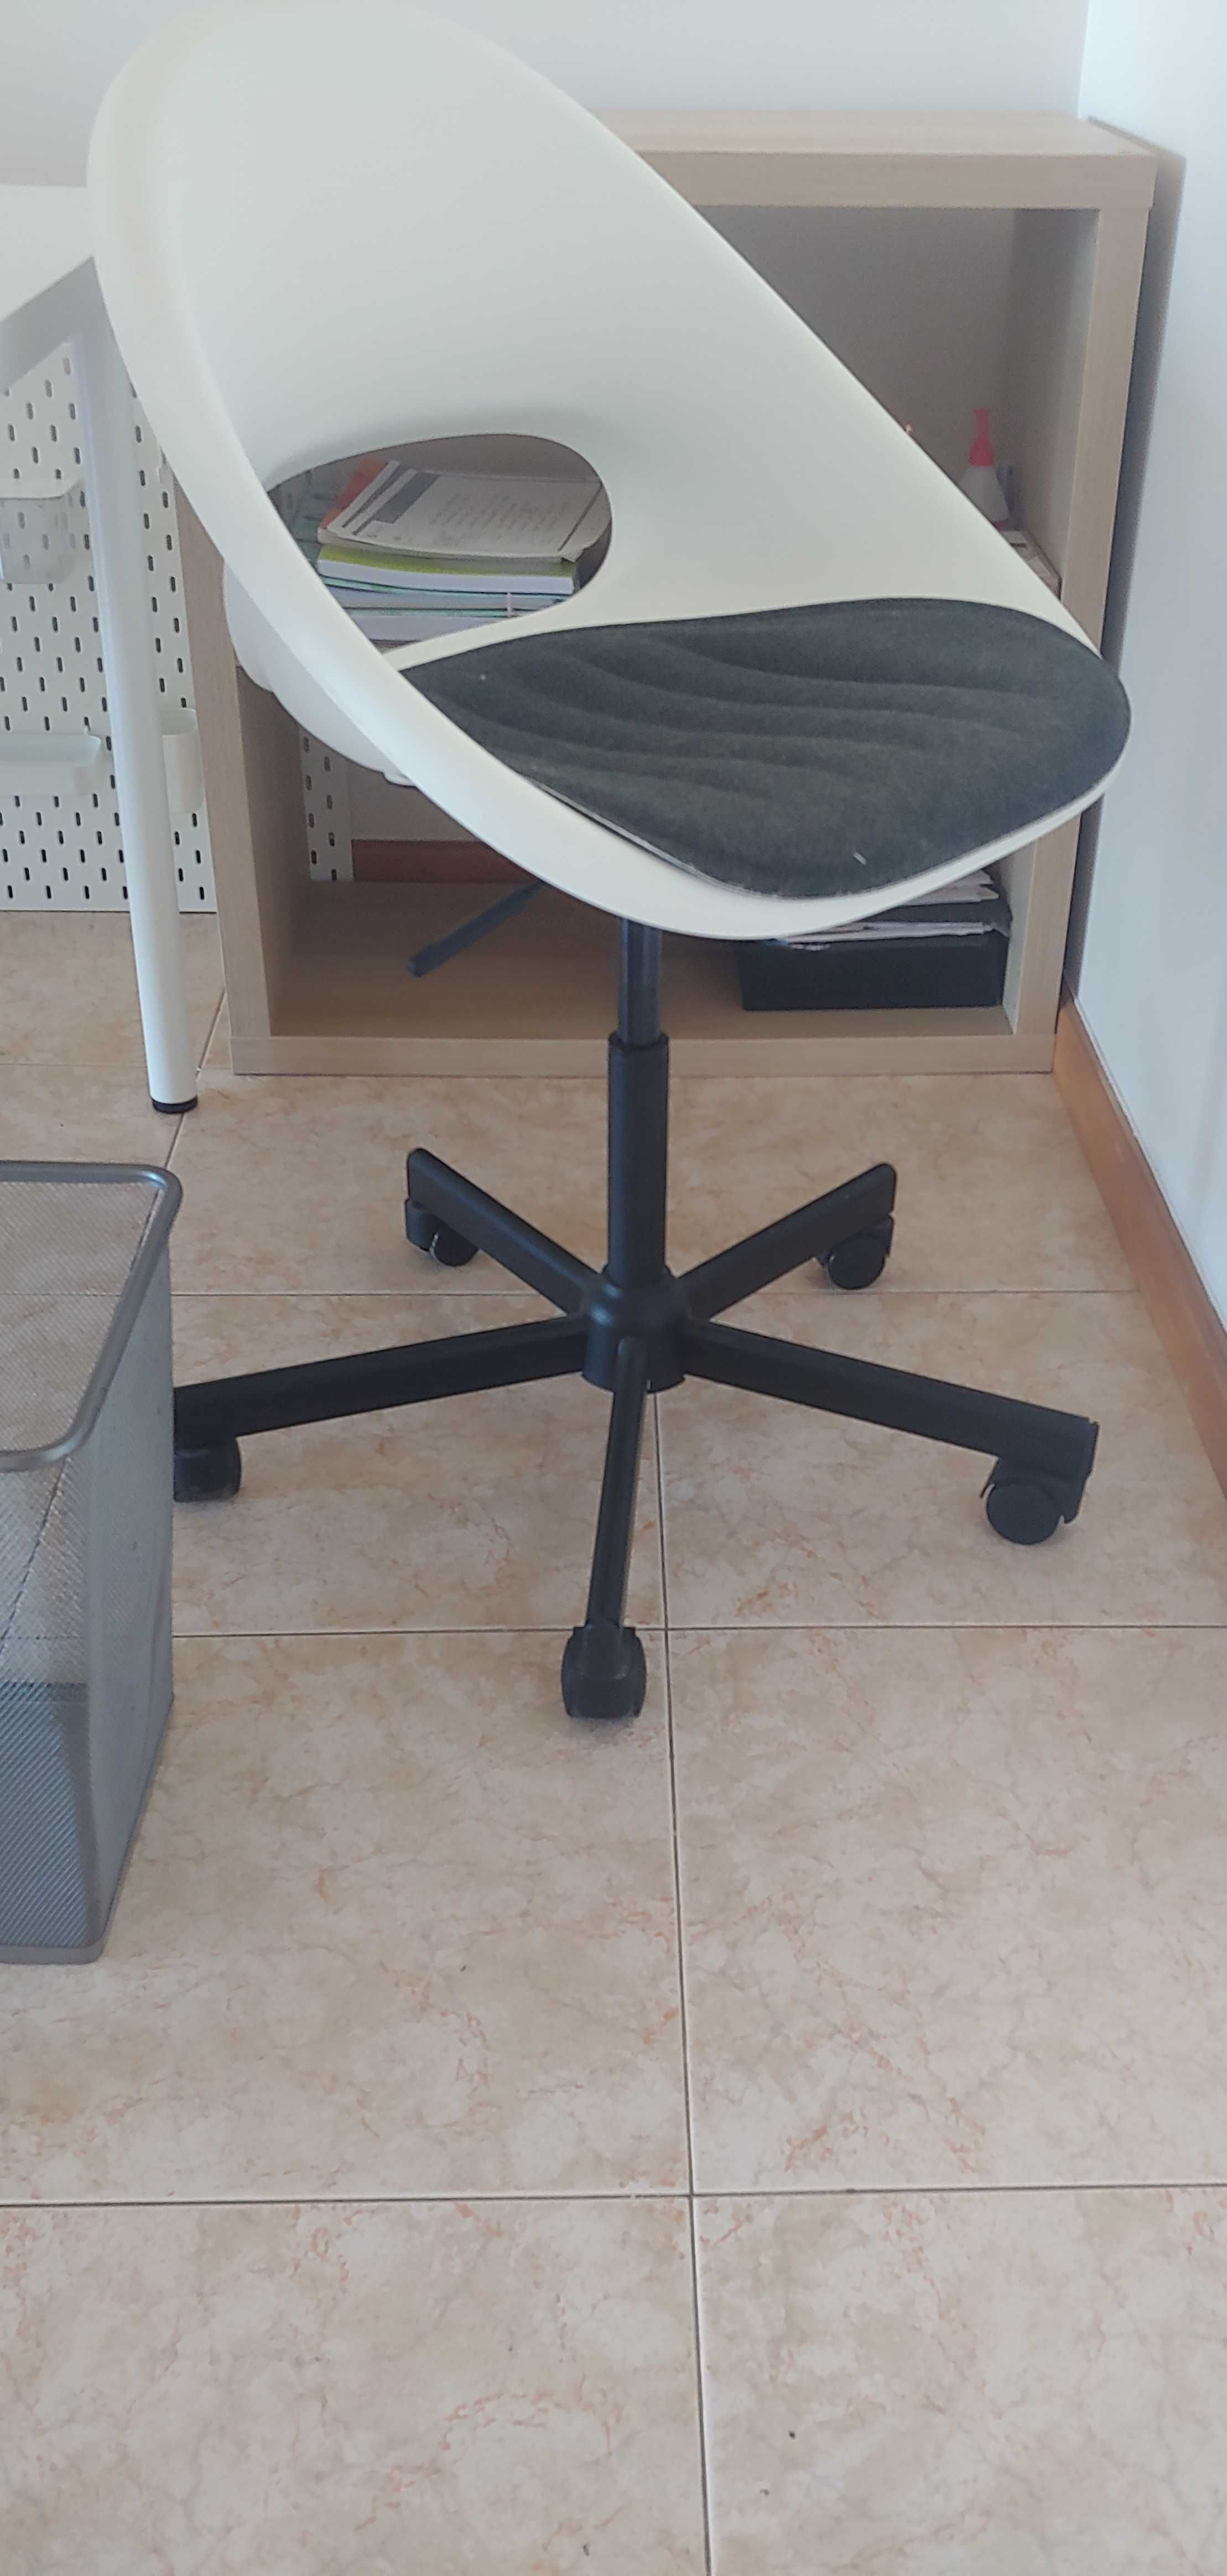 Mesa + cadeira ergonómica + quadro organizador + lixeira metálica